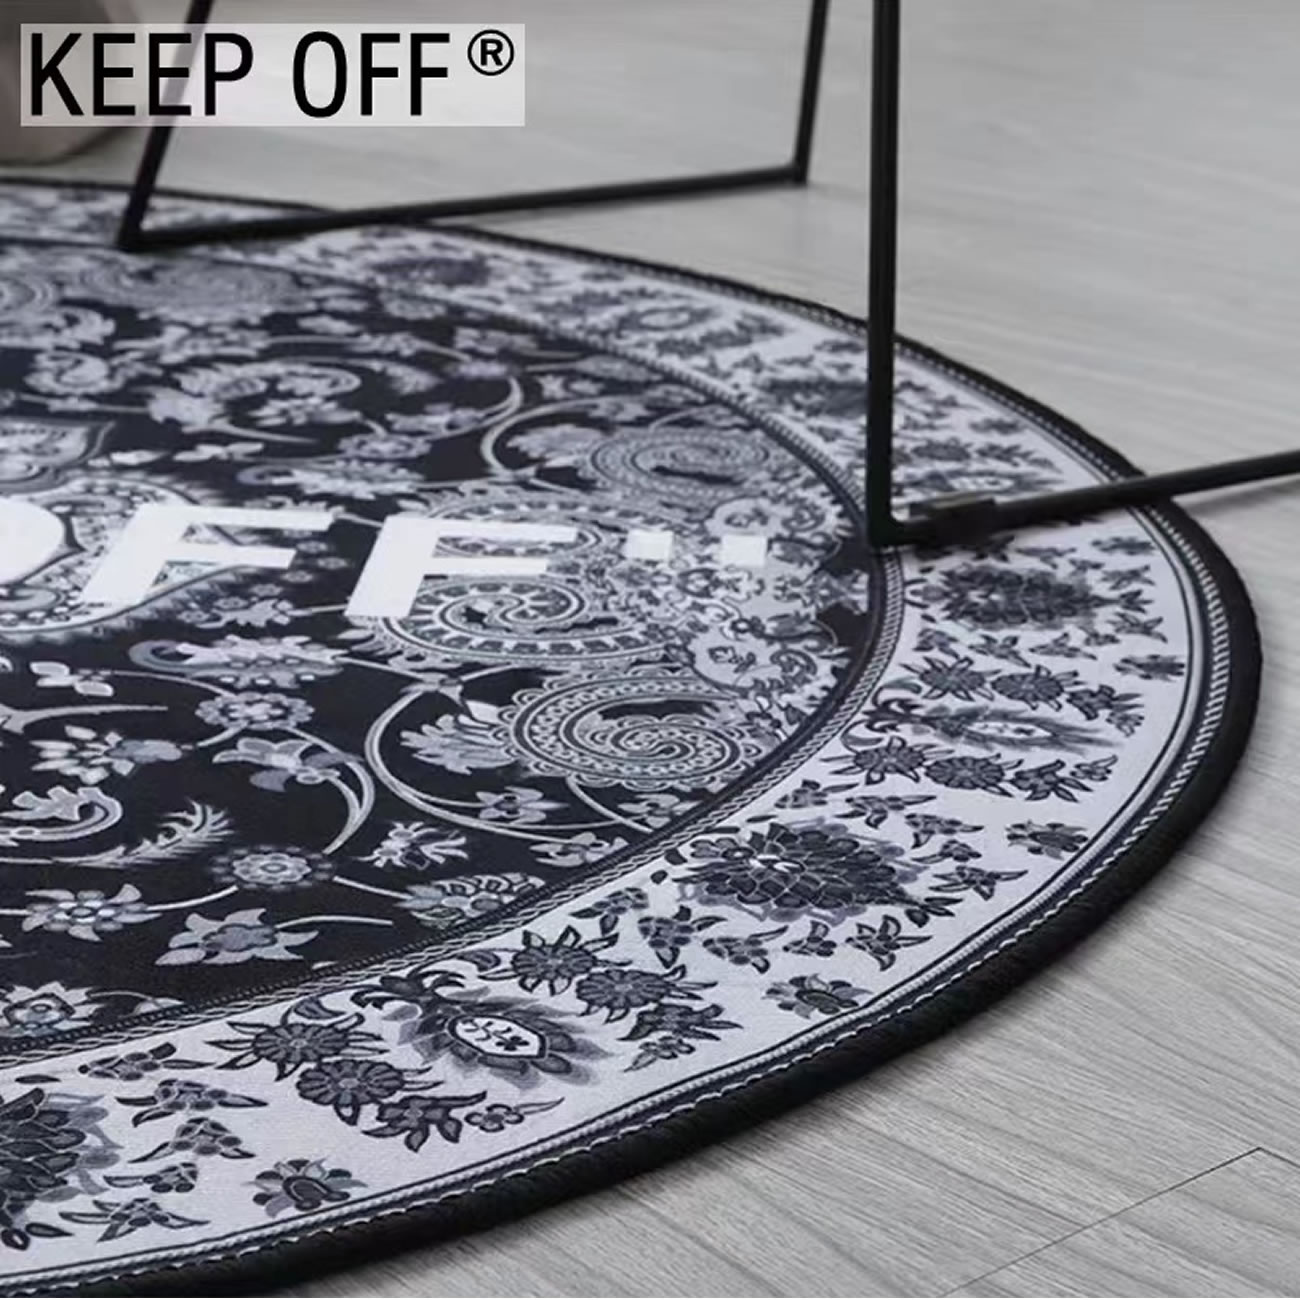 KEEP OFF Carpet Black grey